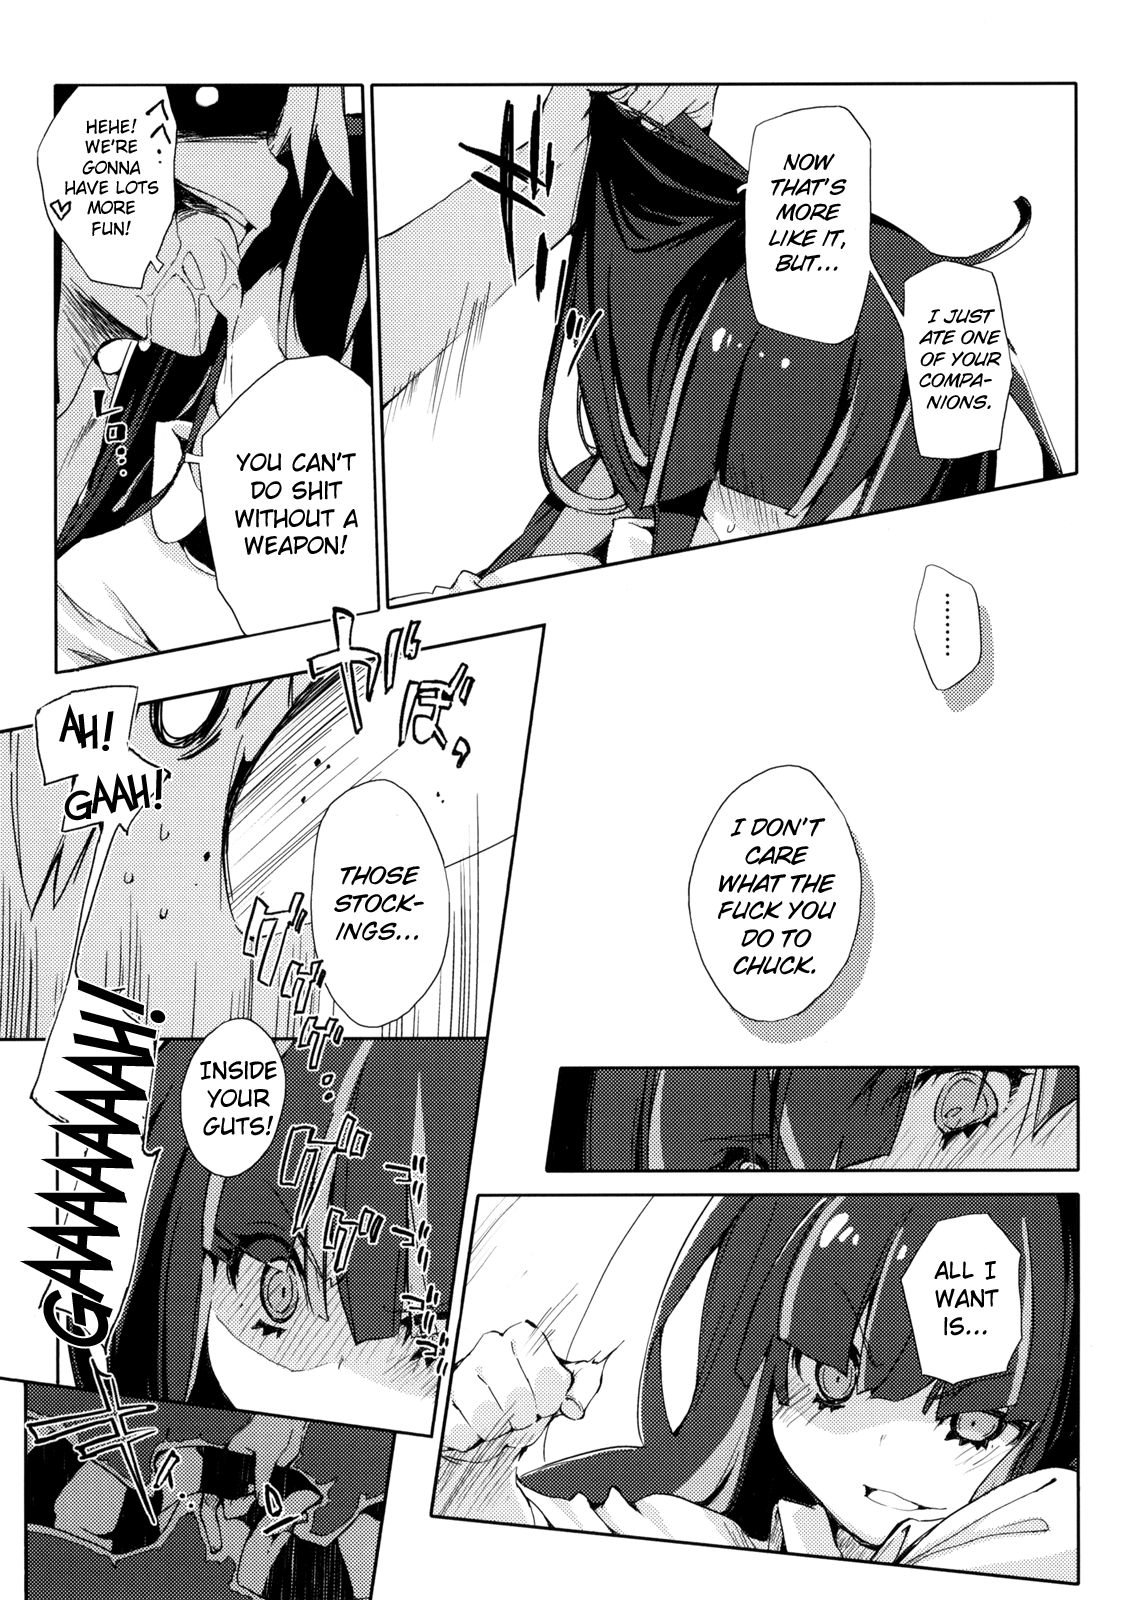 inmoral unmoral hentai manga picture 19